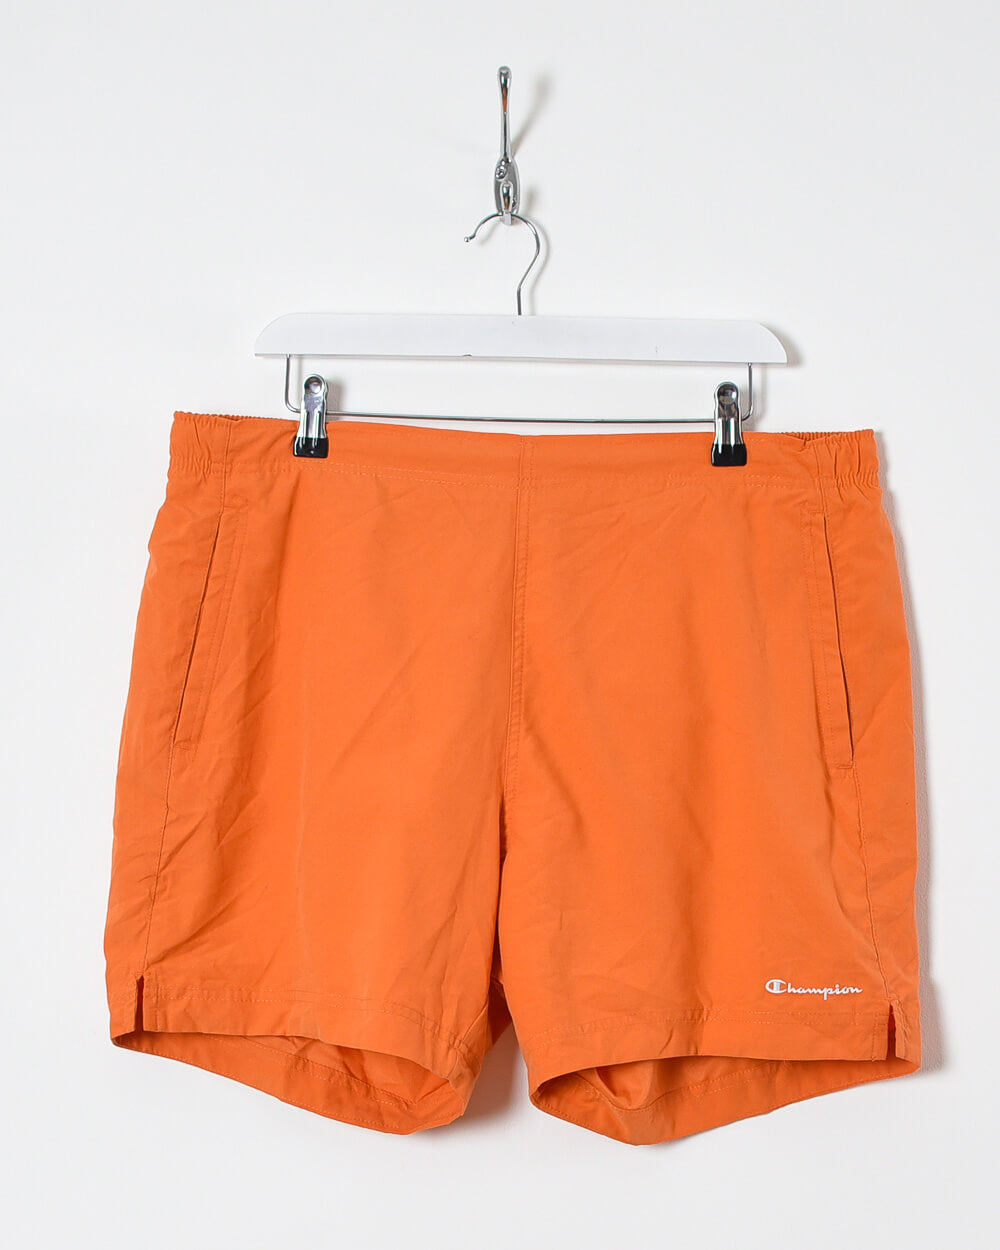 Champion Swimwear Shorts - W36 - Domno Vintage 90s, 80s, 00s Retro and Vintage Clothing 